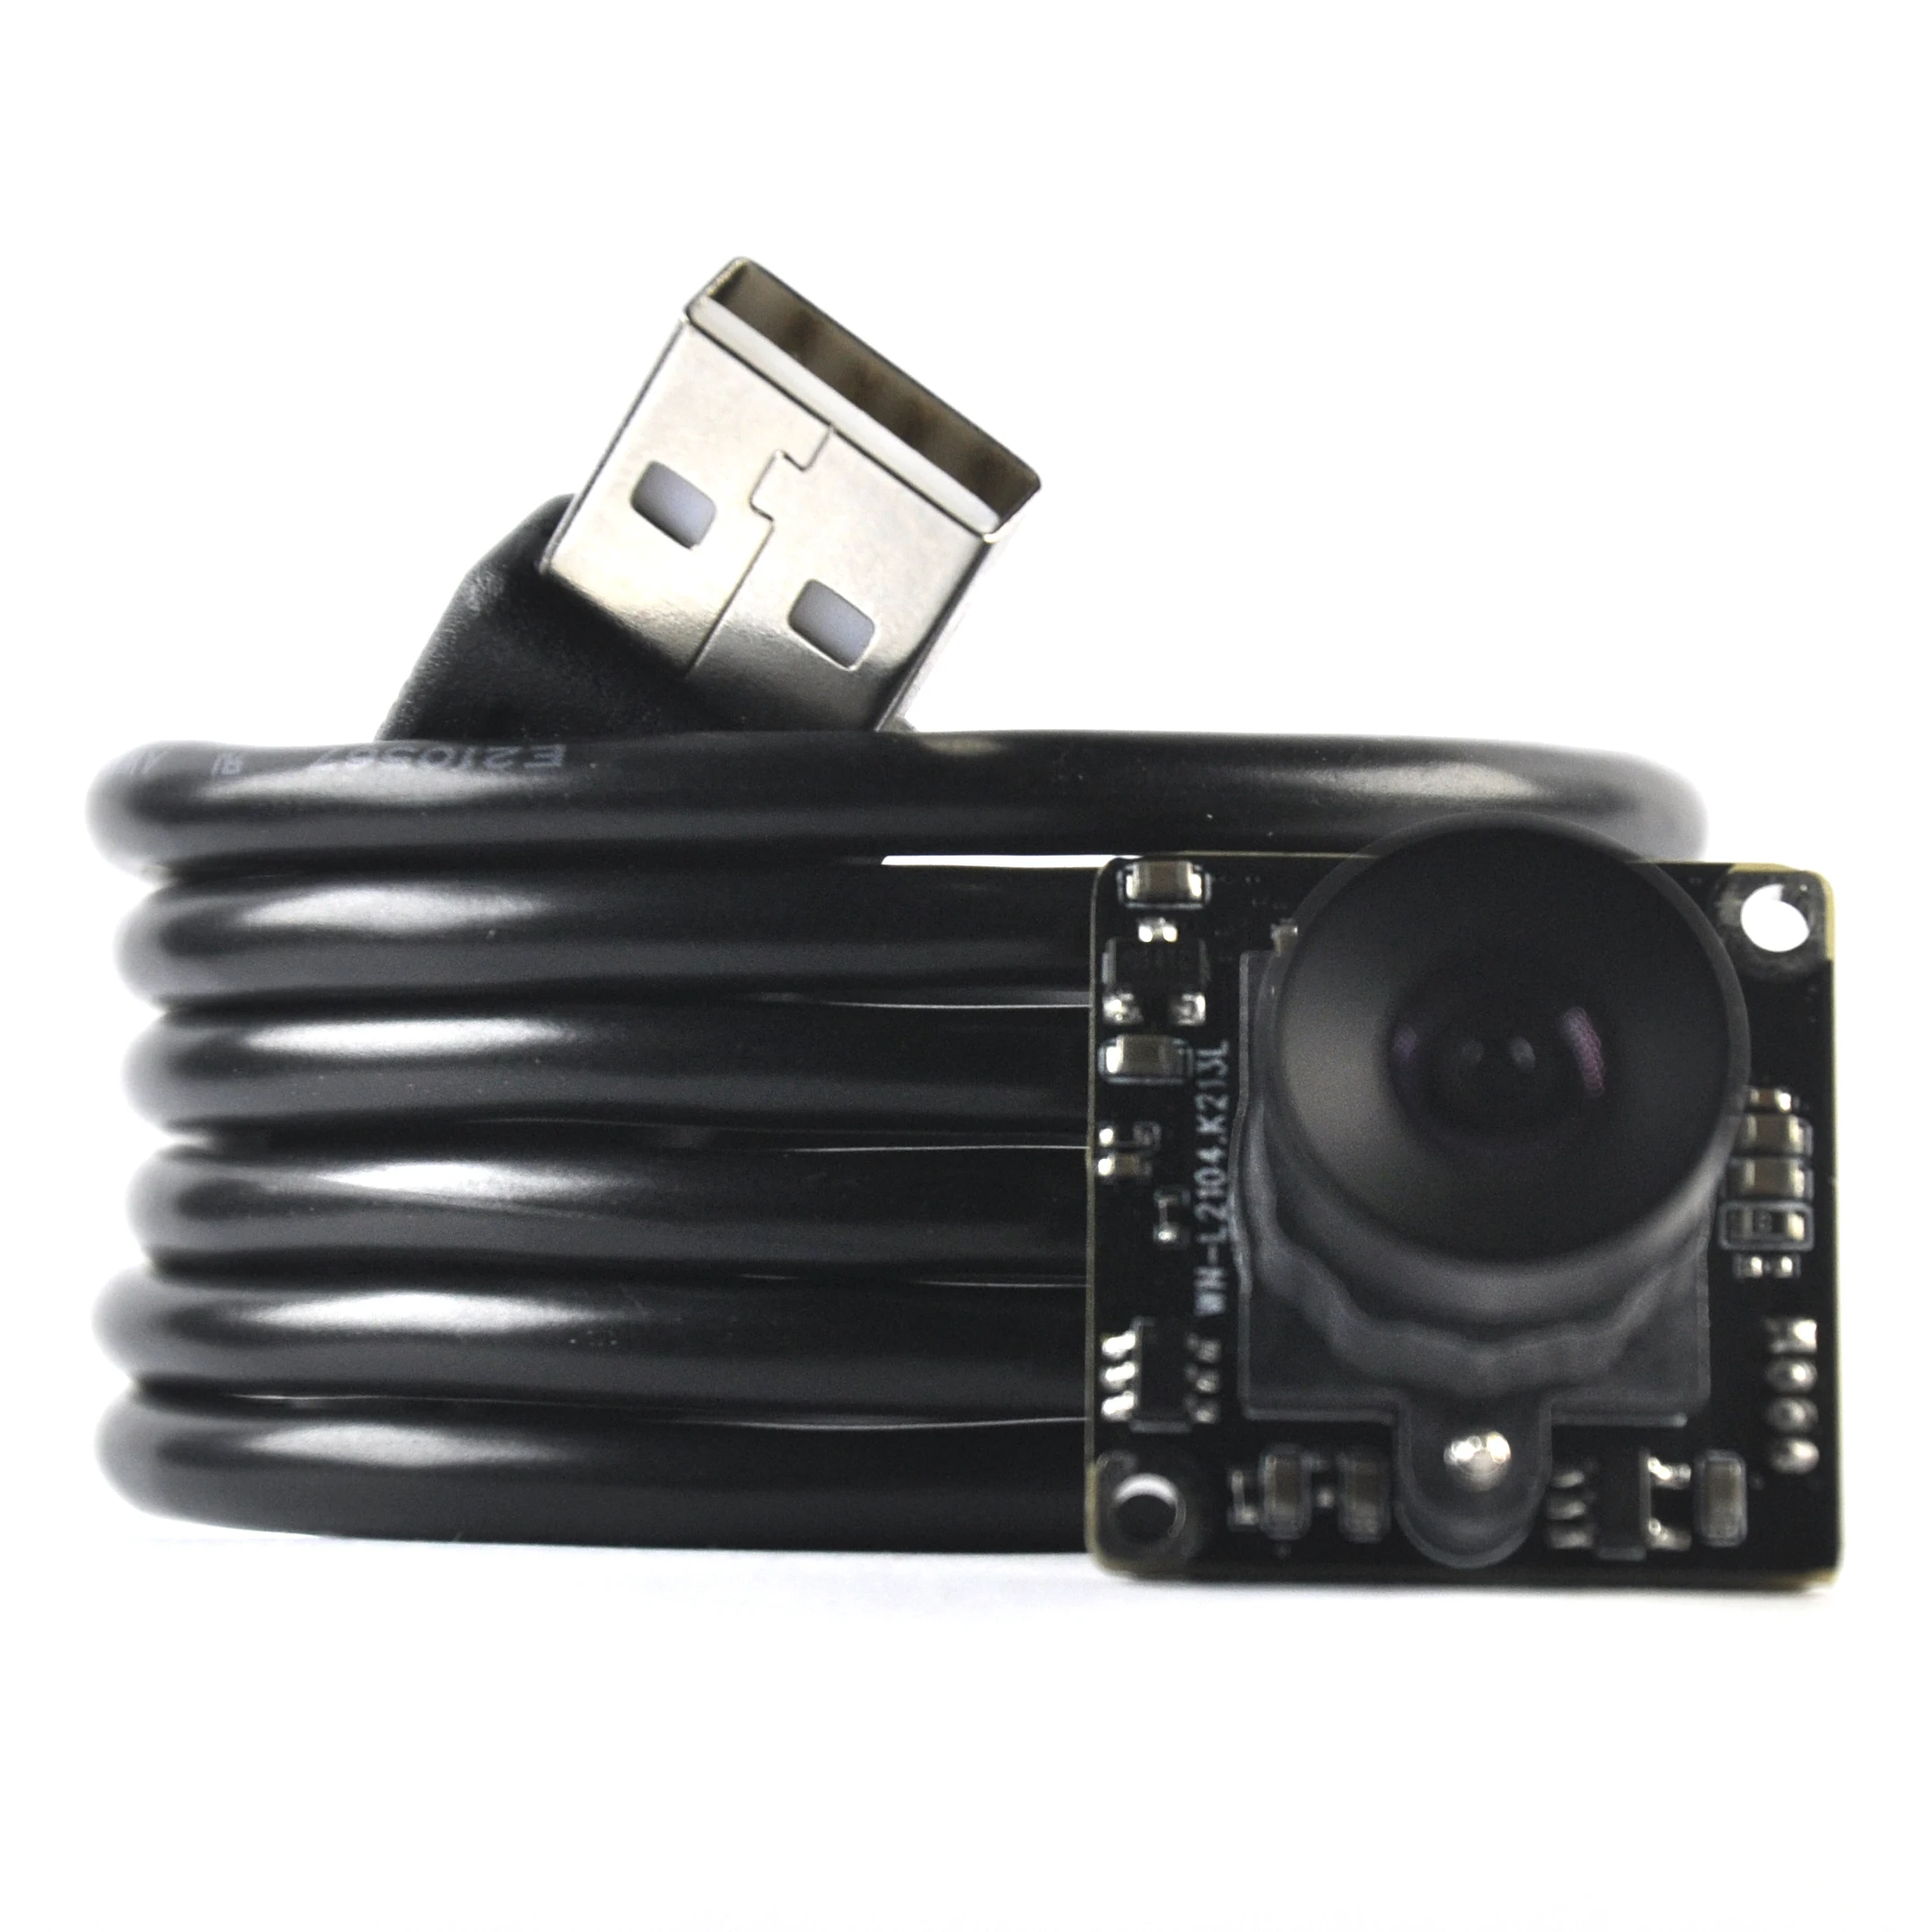 Модуль камеры GC2053 Full HD 1080P FF MF USB с драйвером Plug-n-play для Windows Android Linux Mac OSX